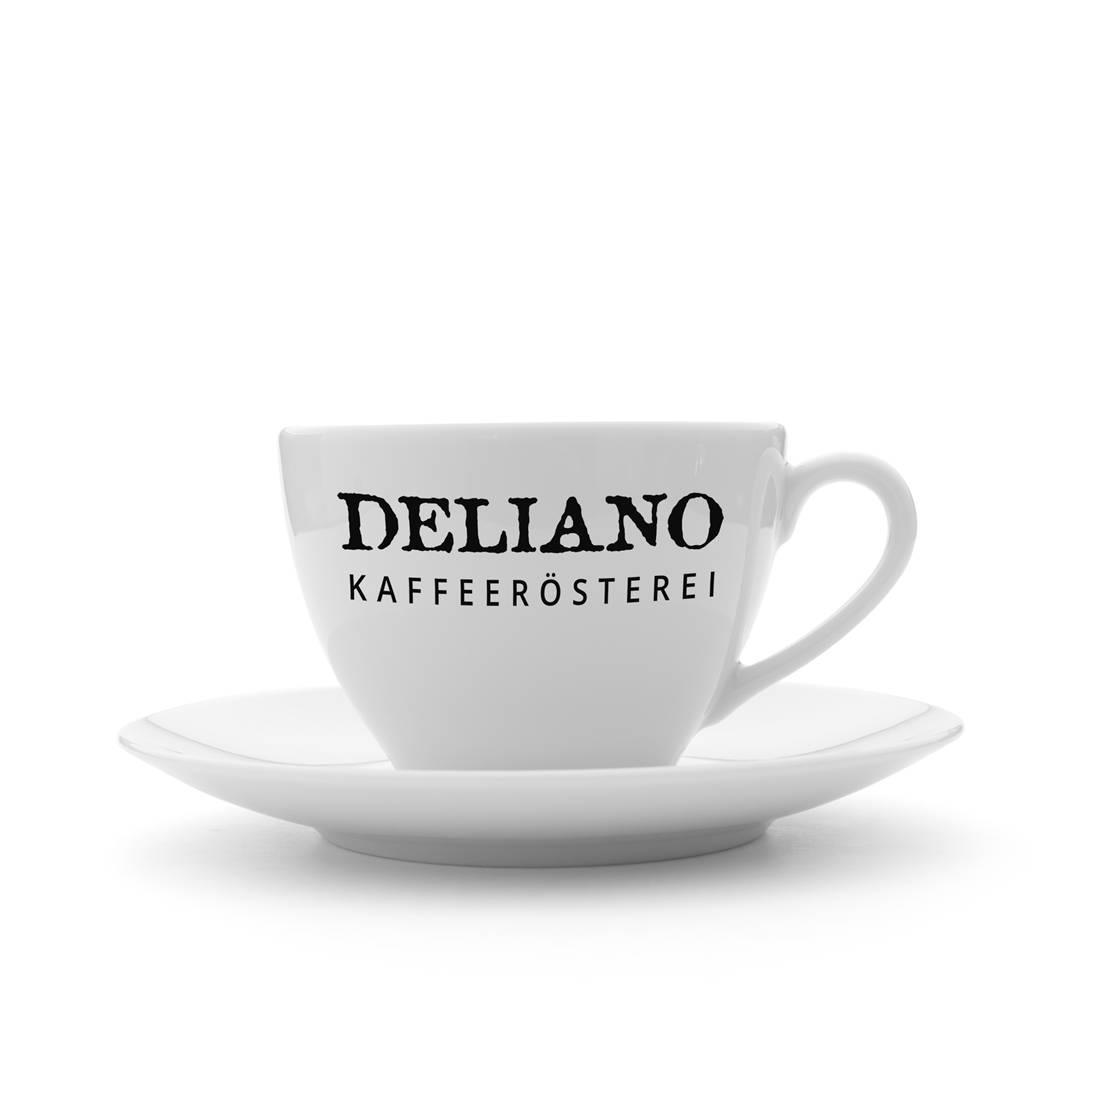 Deliano Kaffee Tasse 180 ml